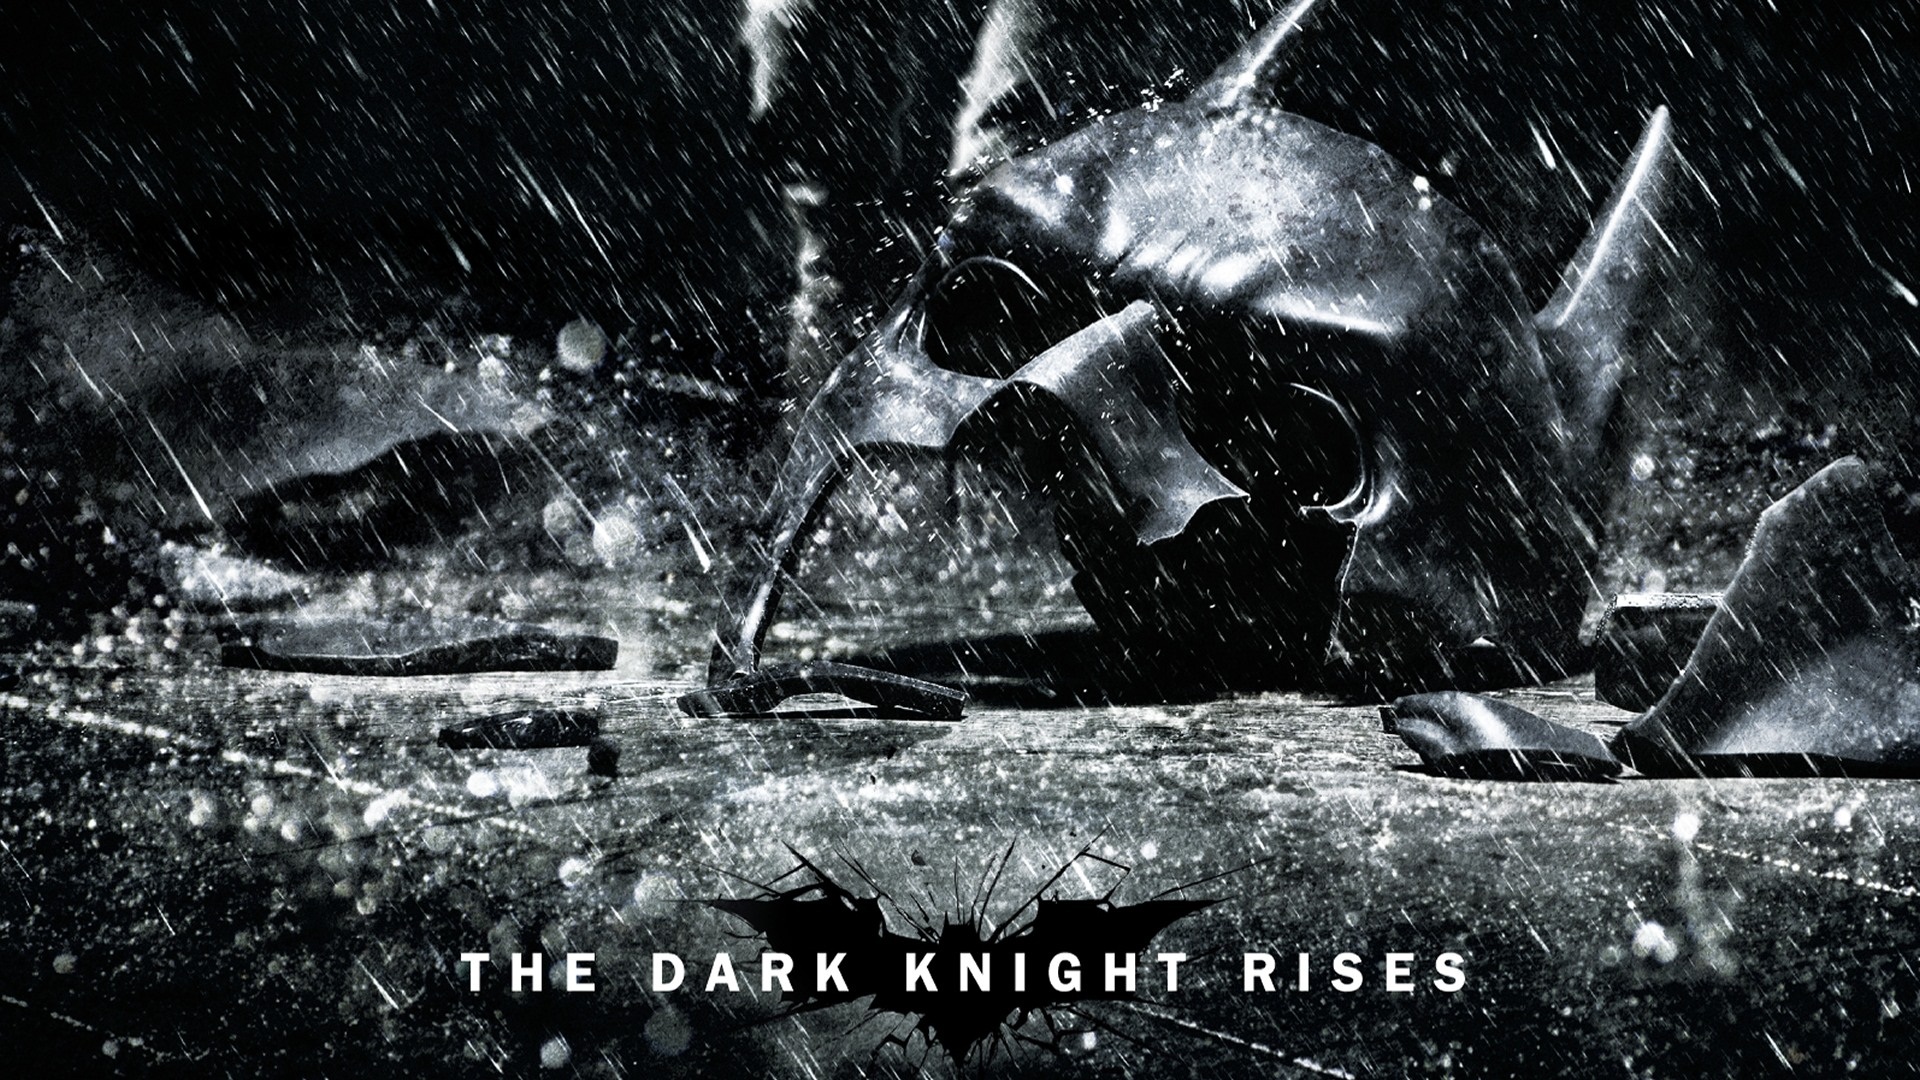 http://designyoutrust.com/wp-content/uploads/2012/07/The-Dark-Knight-Rises-2012-3.jpg